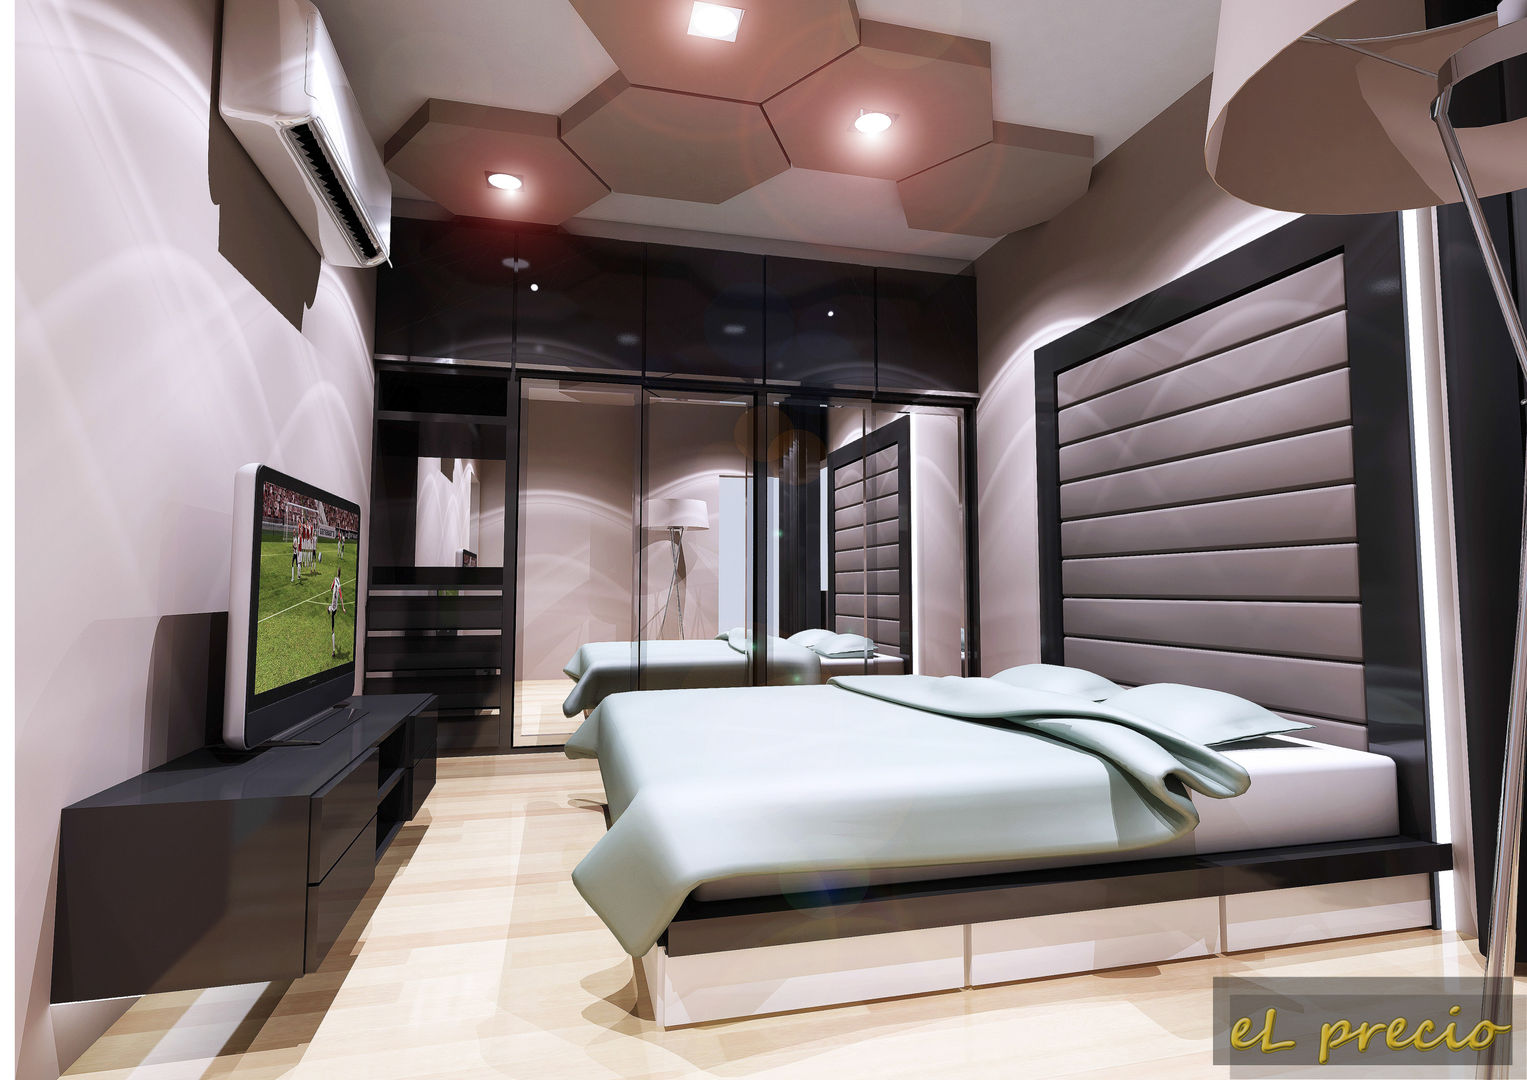 PROPOSED INTERIOR DESIGN FOR BANJARIA COURT APARTMENT AT BATU CAVES, SELANGOR eL precio Tropical style bedroom